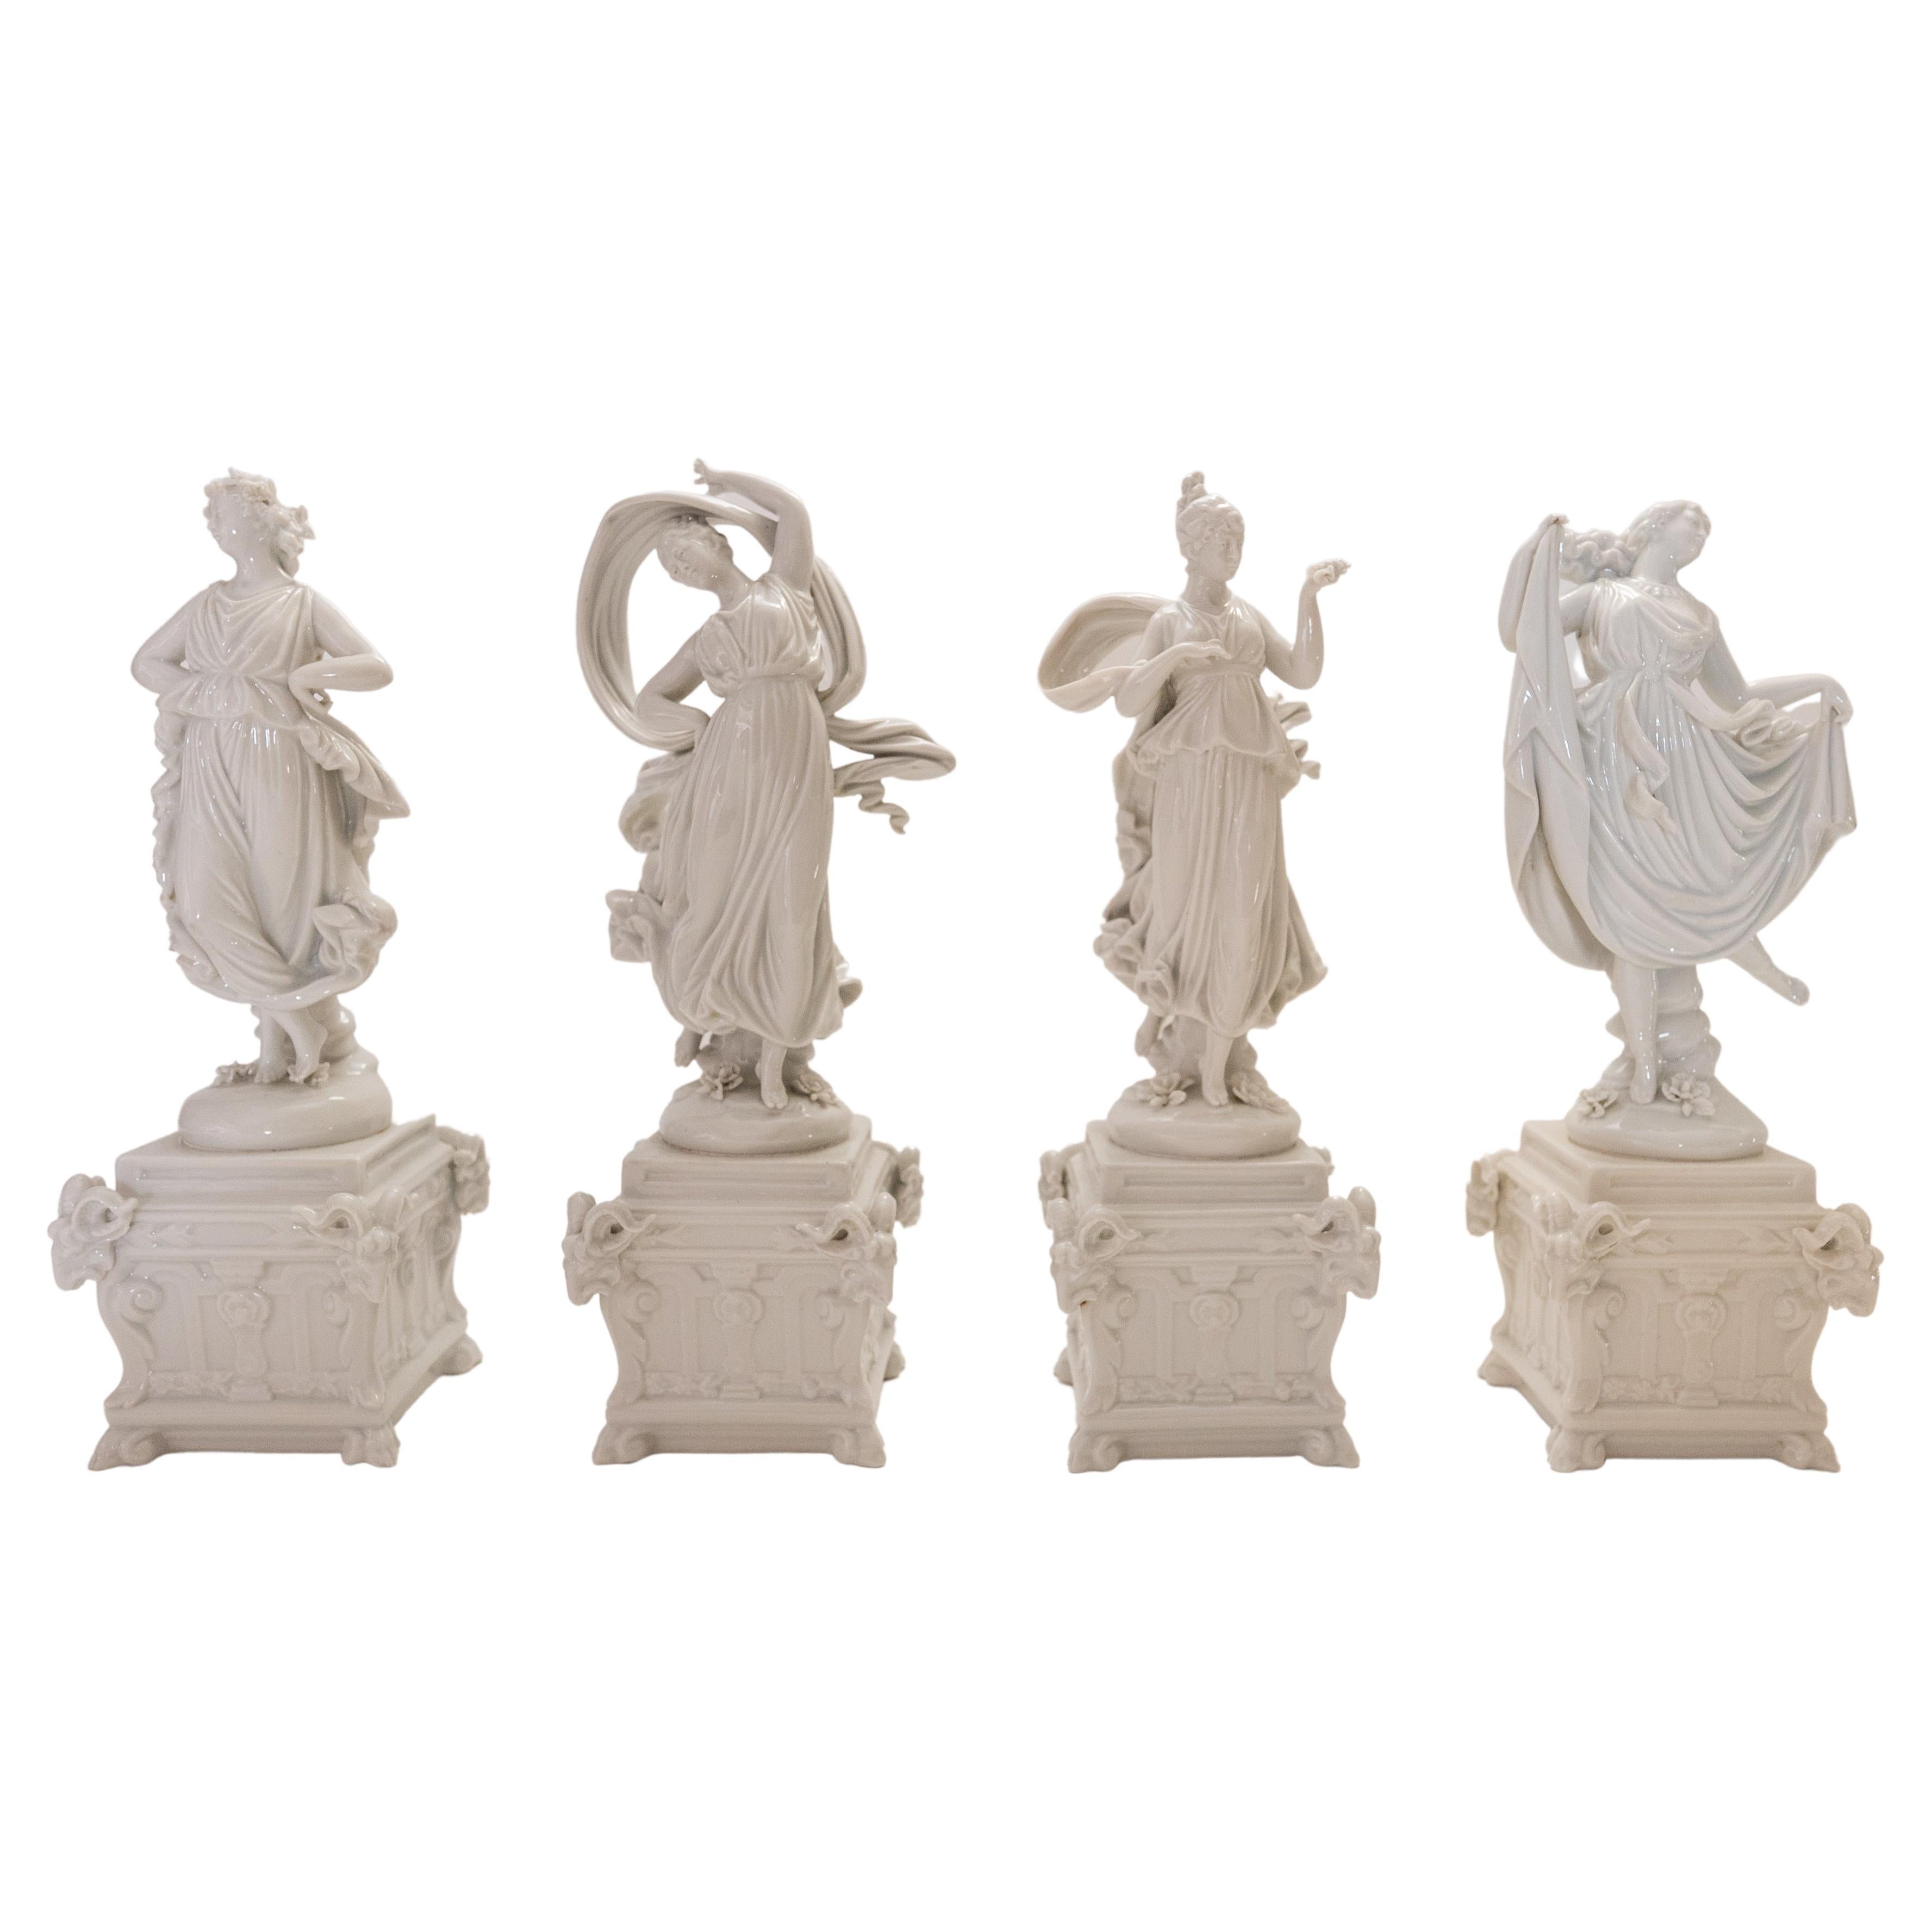 Four Capo Di Monte Porcelain Figurines, Blanc de Chine, Antique, Circa 1900